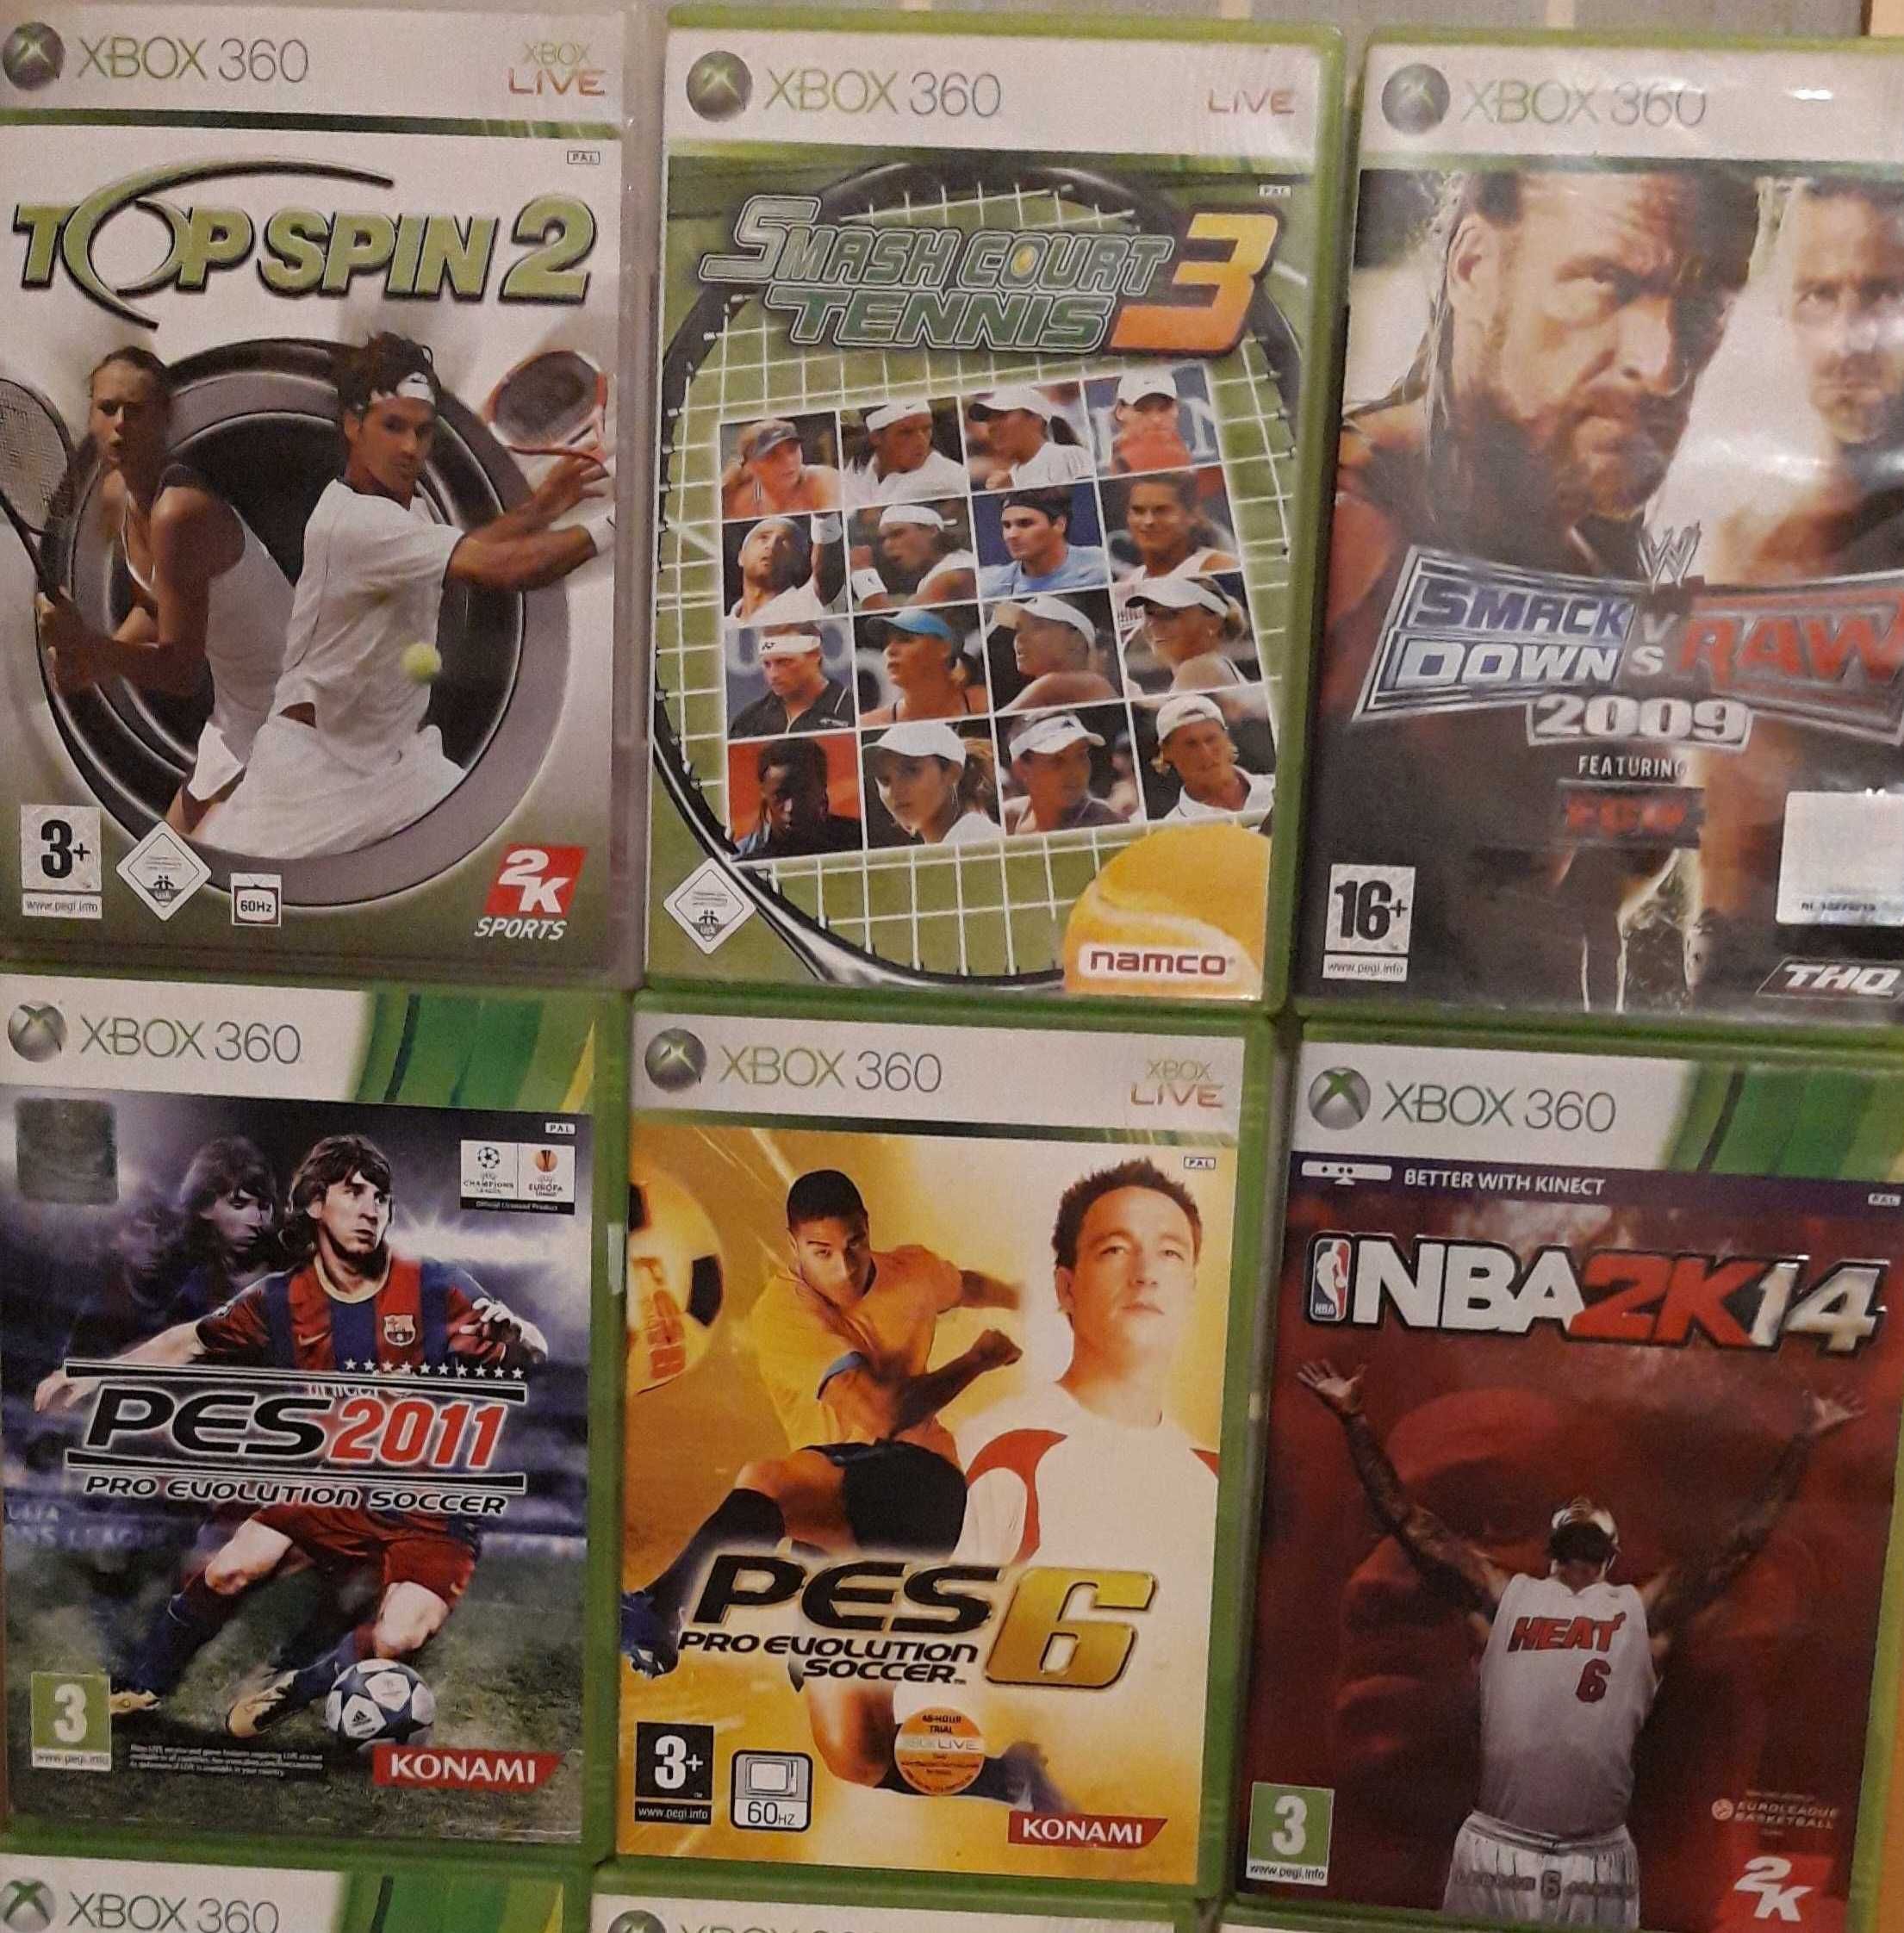 GTA V, Capitan America, Lost Planet, FIFA, Lego, Forza, Dirt, Xbox 360